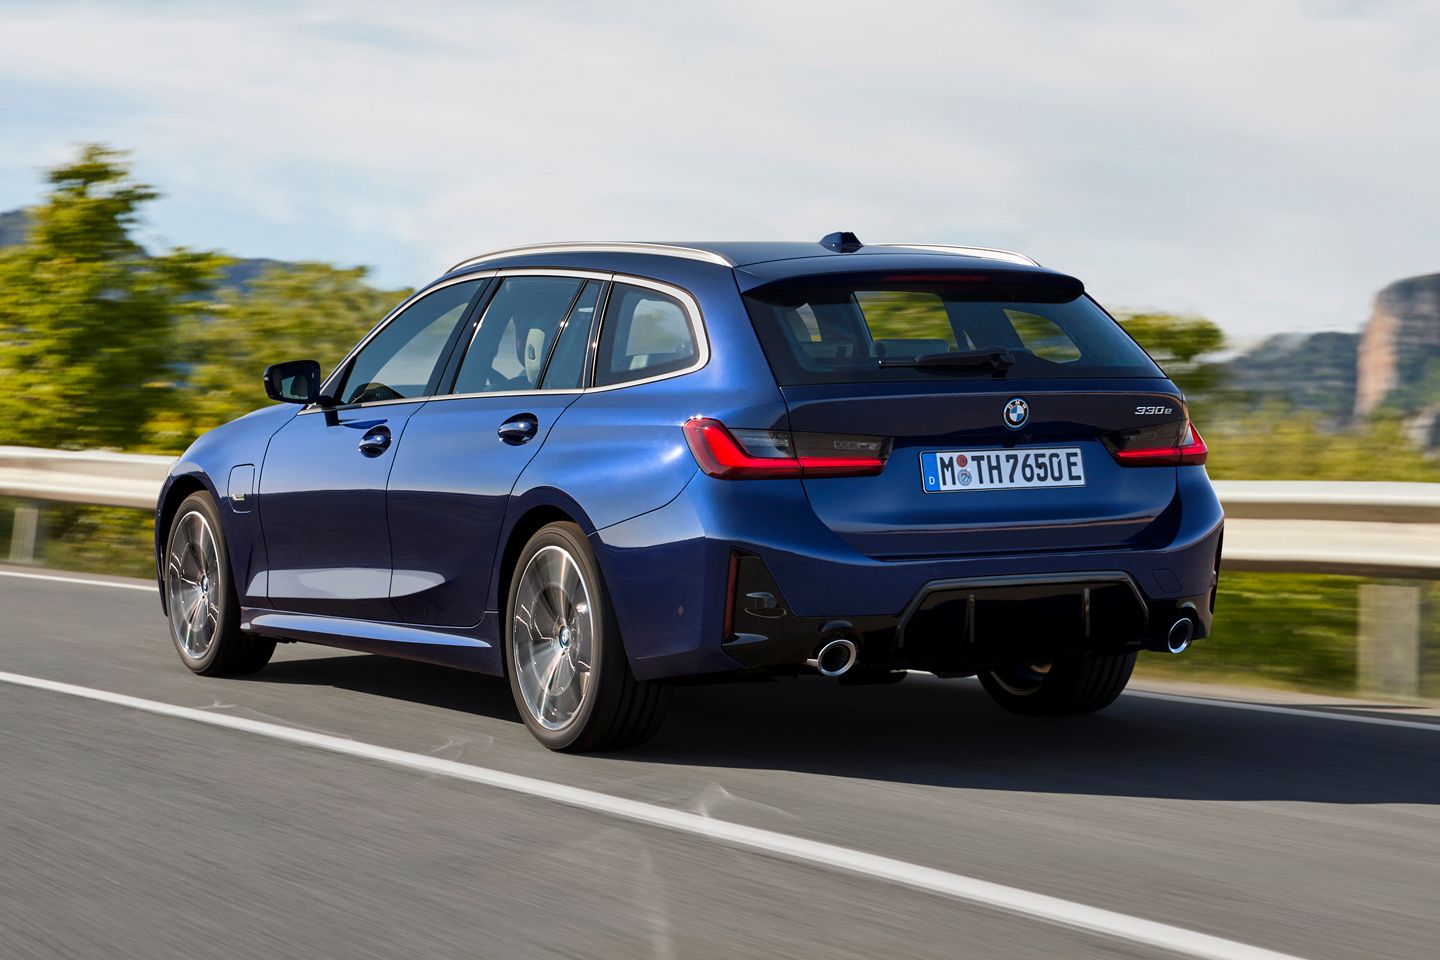 BMW unveils G20 3 Series facelift - PistonHeads UK